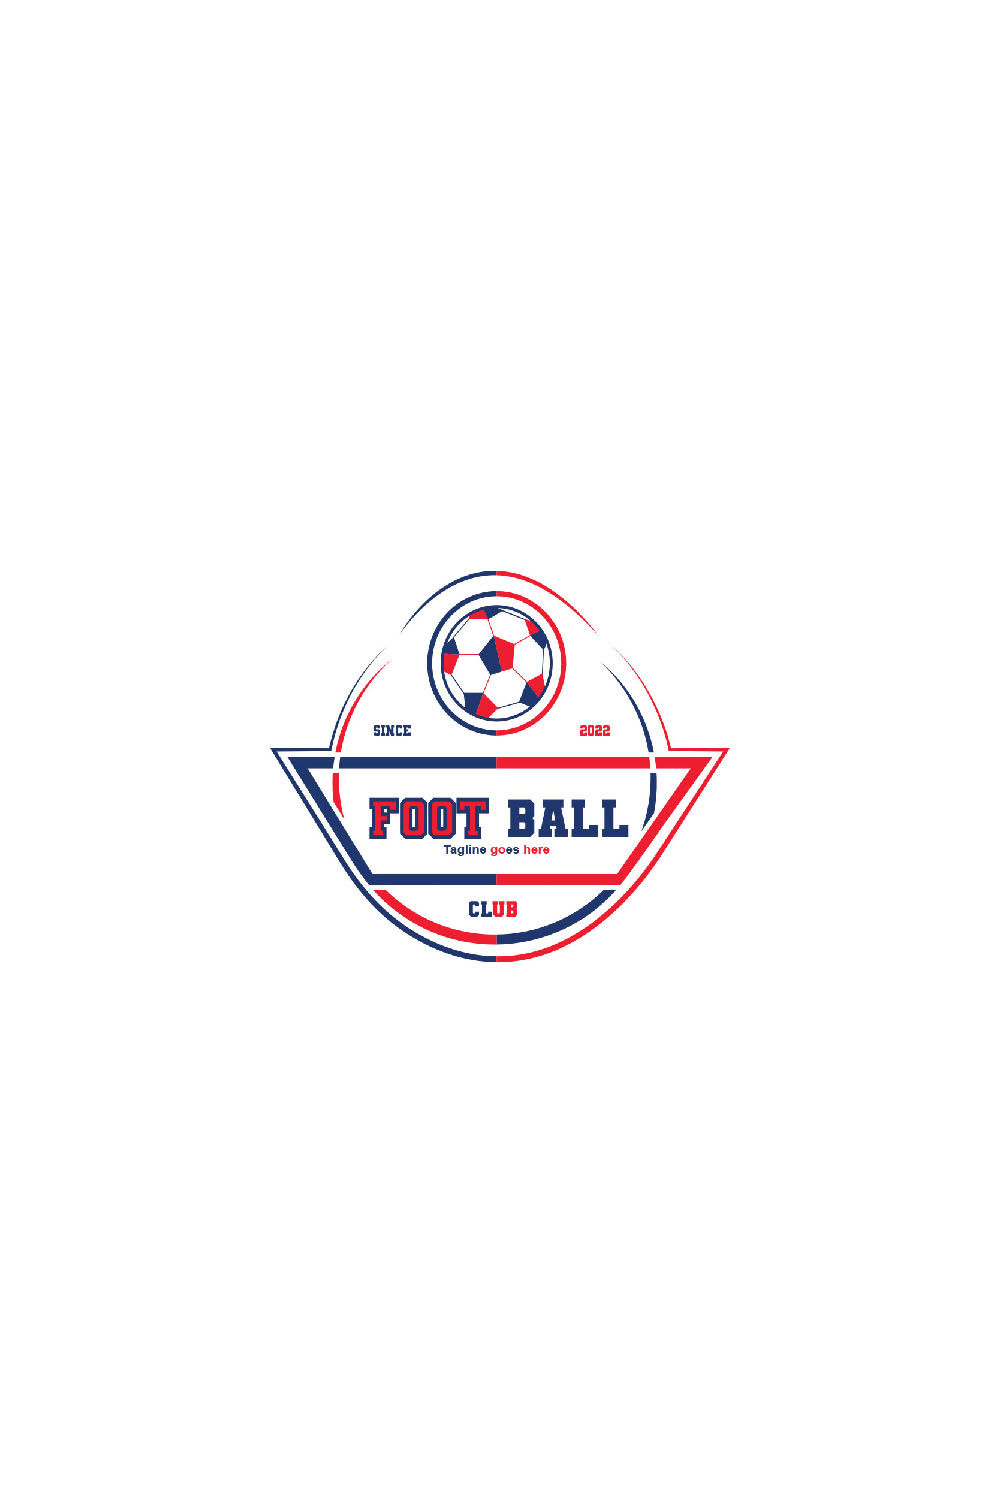 Creative and Stylish Foot Ball Sports Logo Design pinterest image.